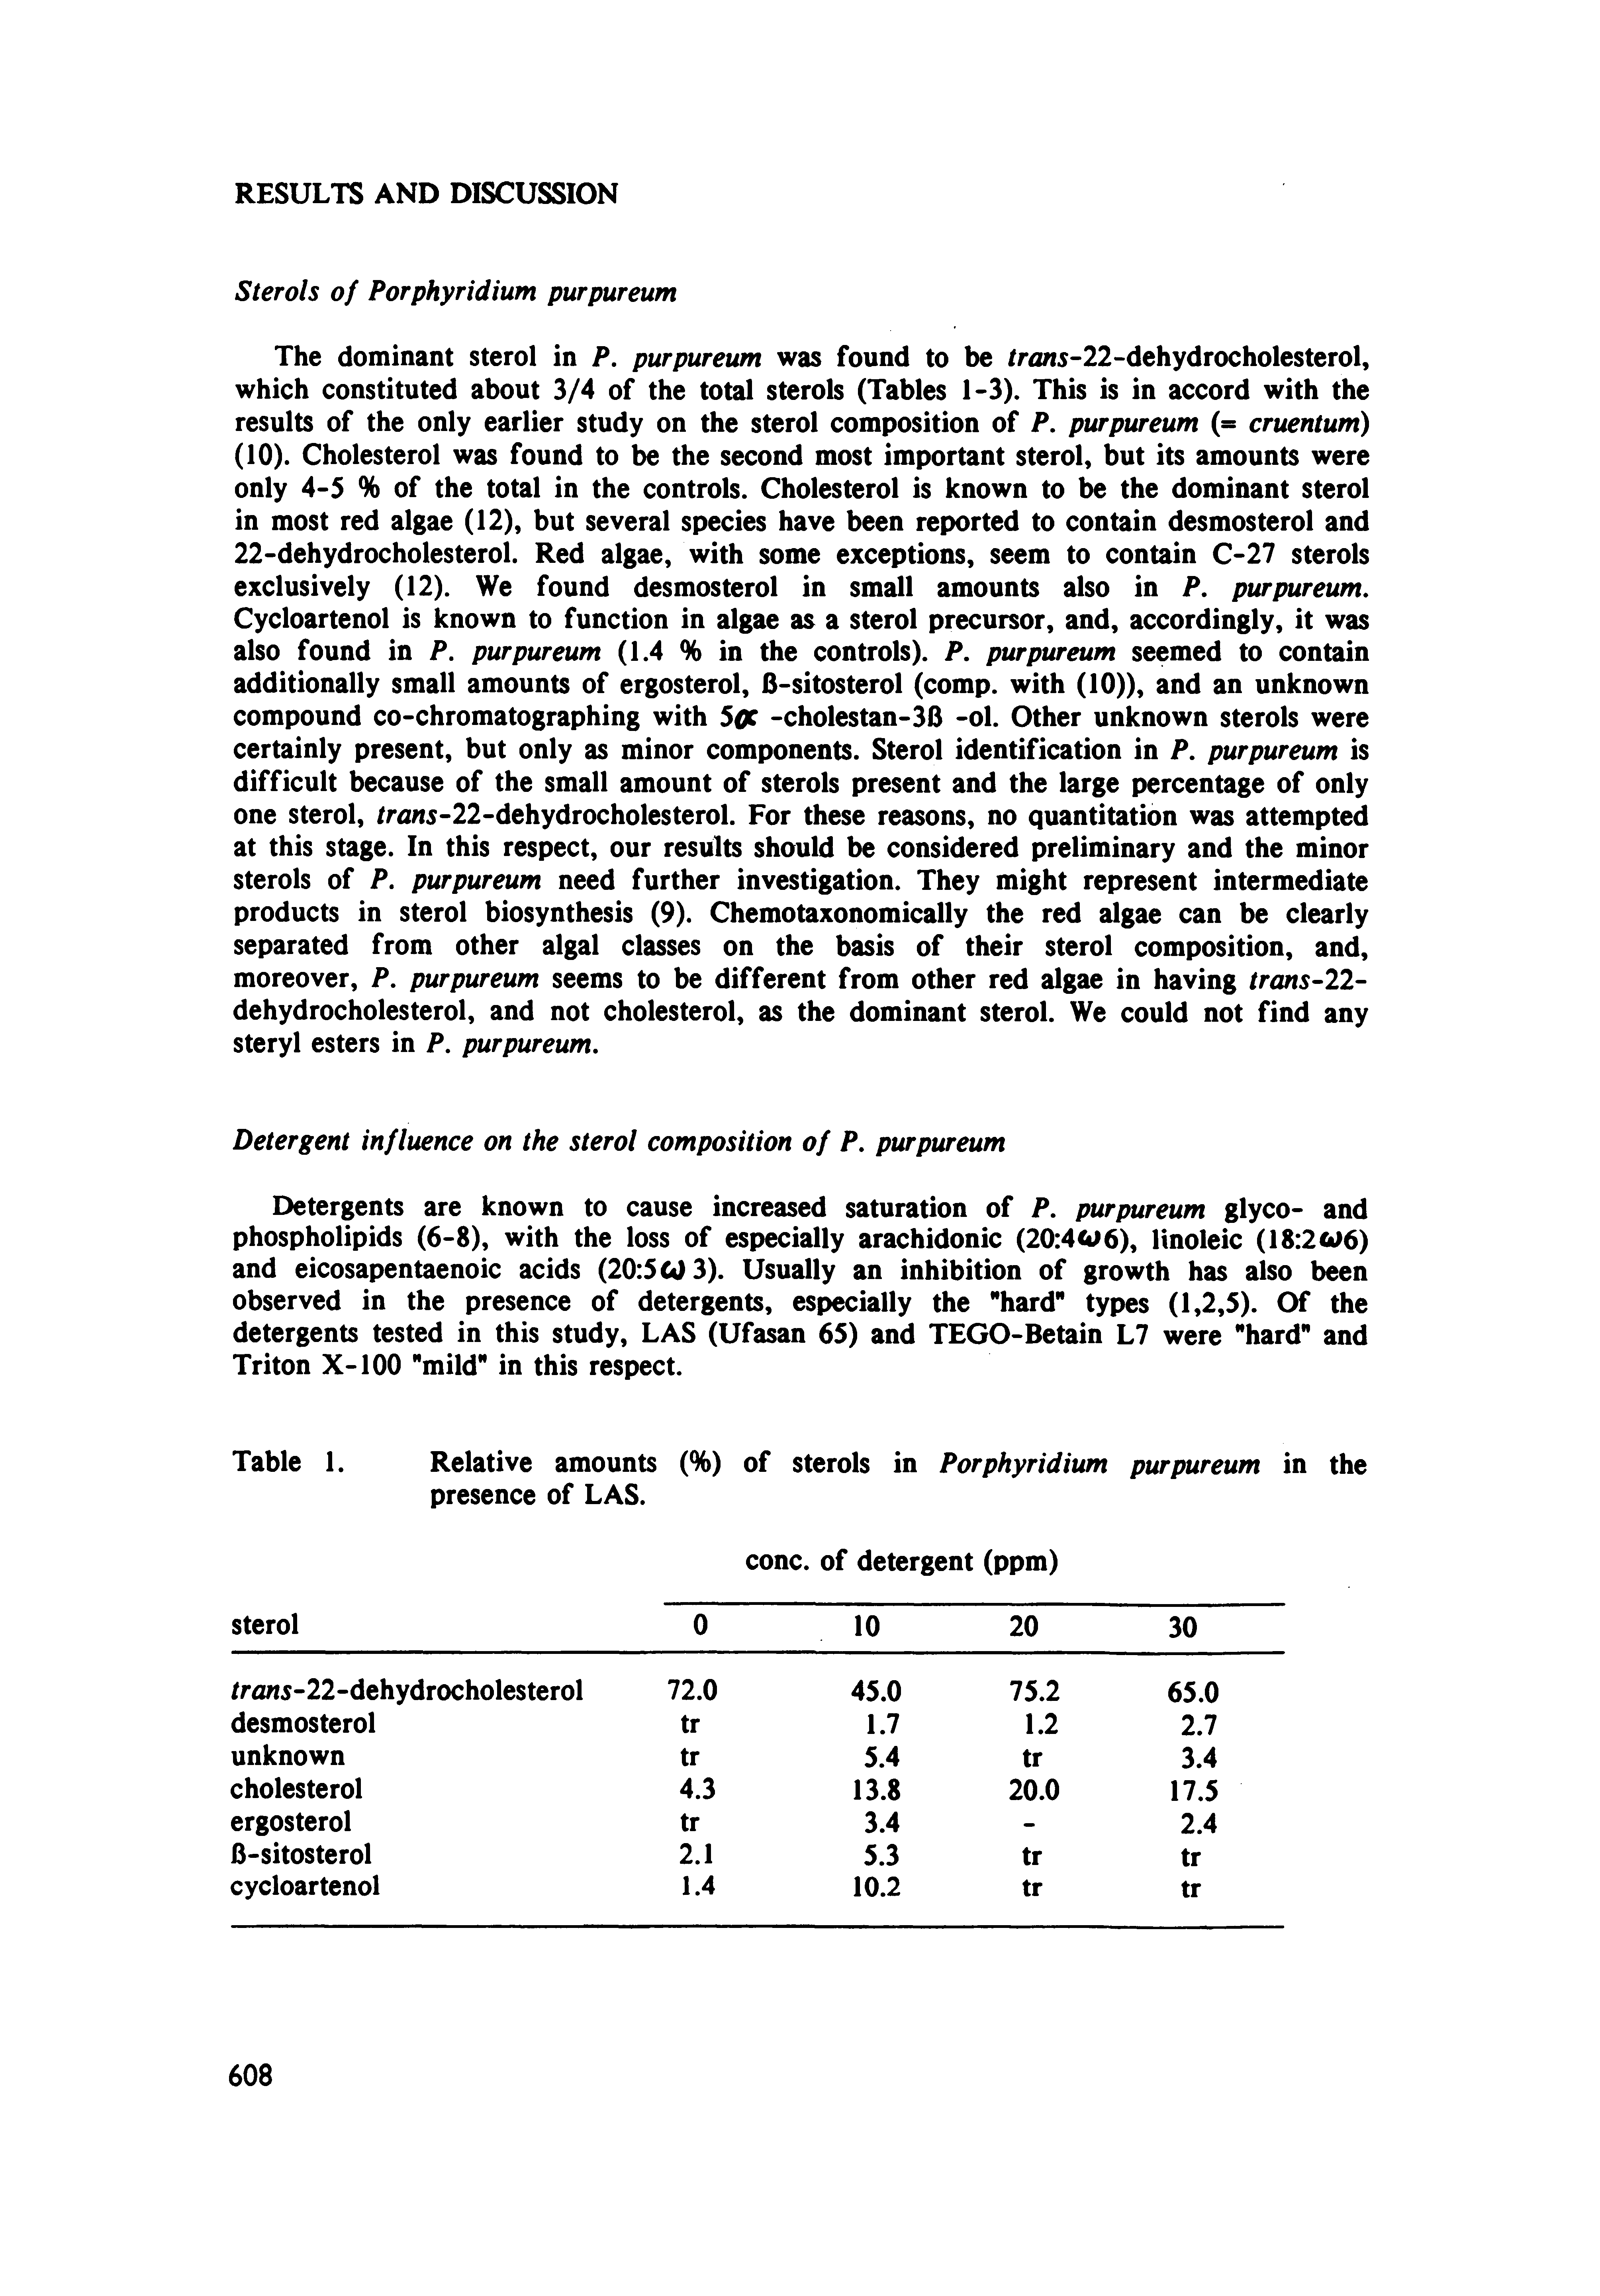 Table 1. Relative amounts (%) of sterols in Porphyridium purpureum in the presence of LAS.